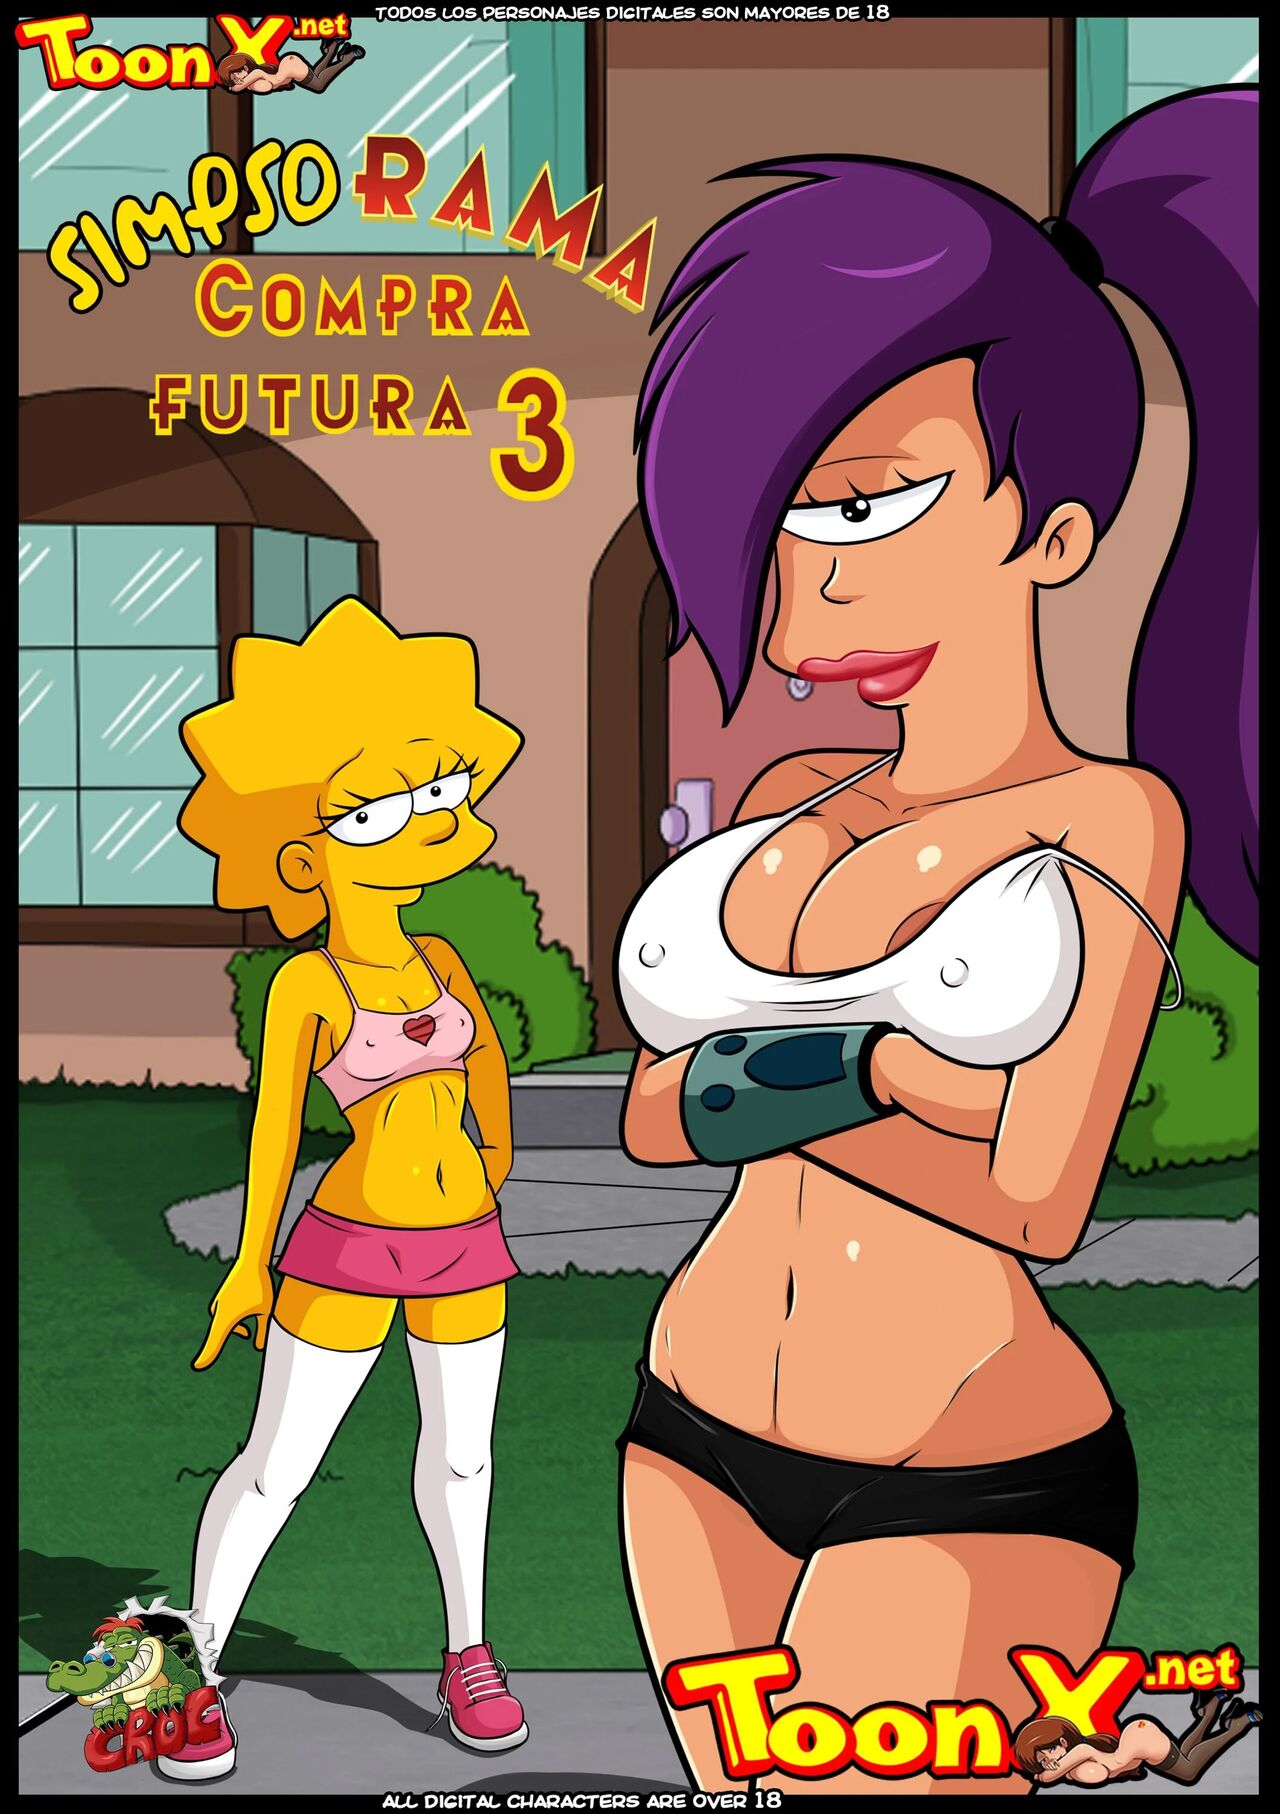 Futurama Shemale Girls - Simpso-Rama! (The Simpsons , Futurama) [Croc] - 3 - Porn Cartoon Comics